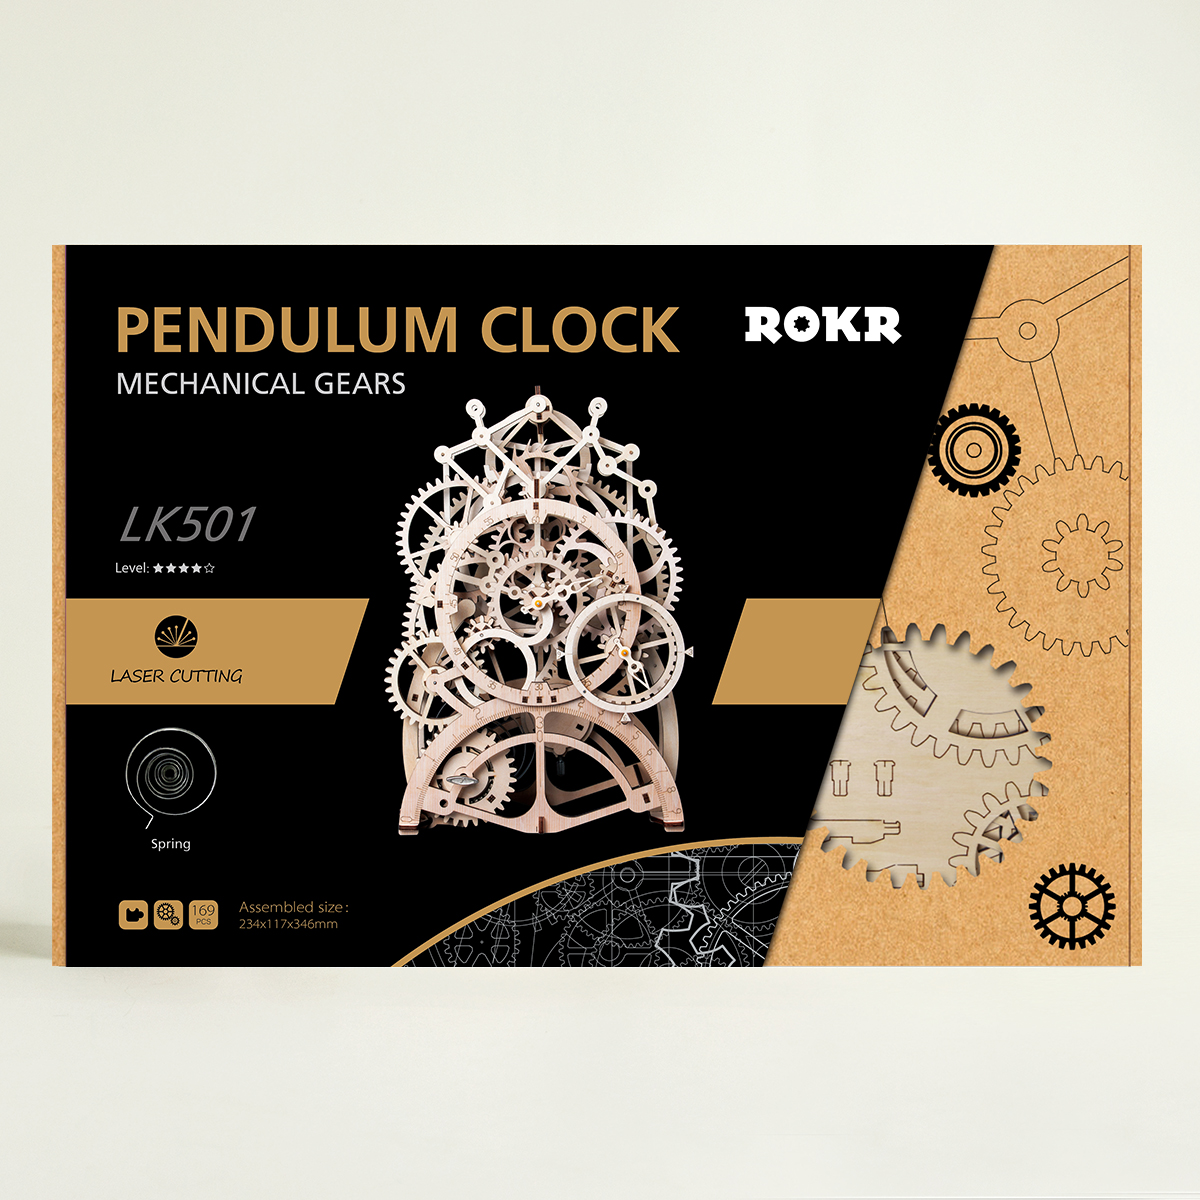 Rokr Pendulum Clock 3D Mechanical Gears Wood Puzzle Kit LK501 SEALED 